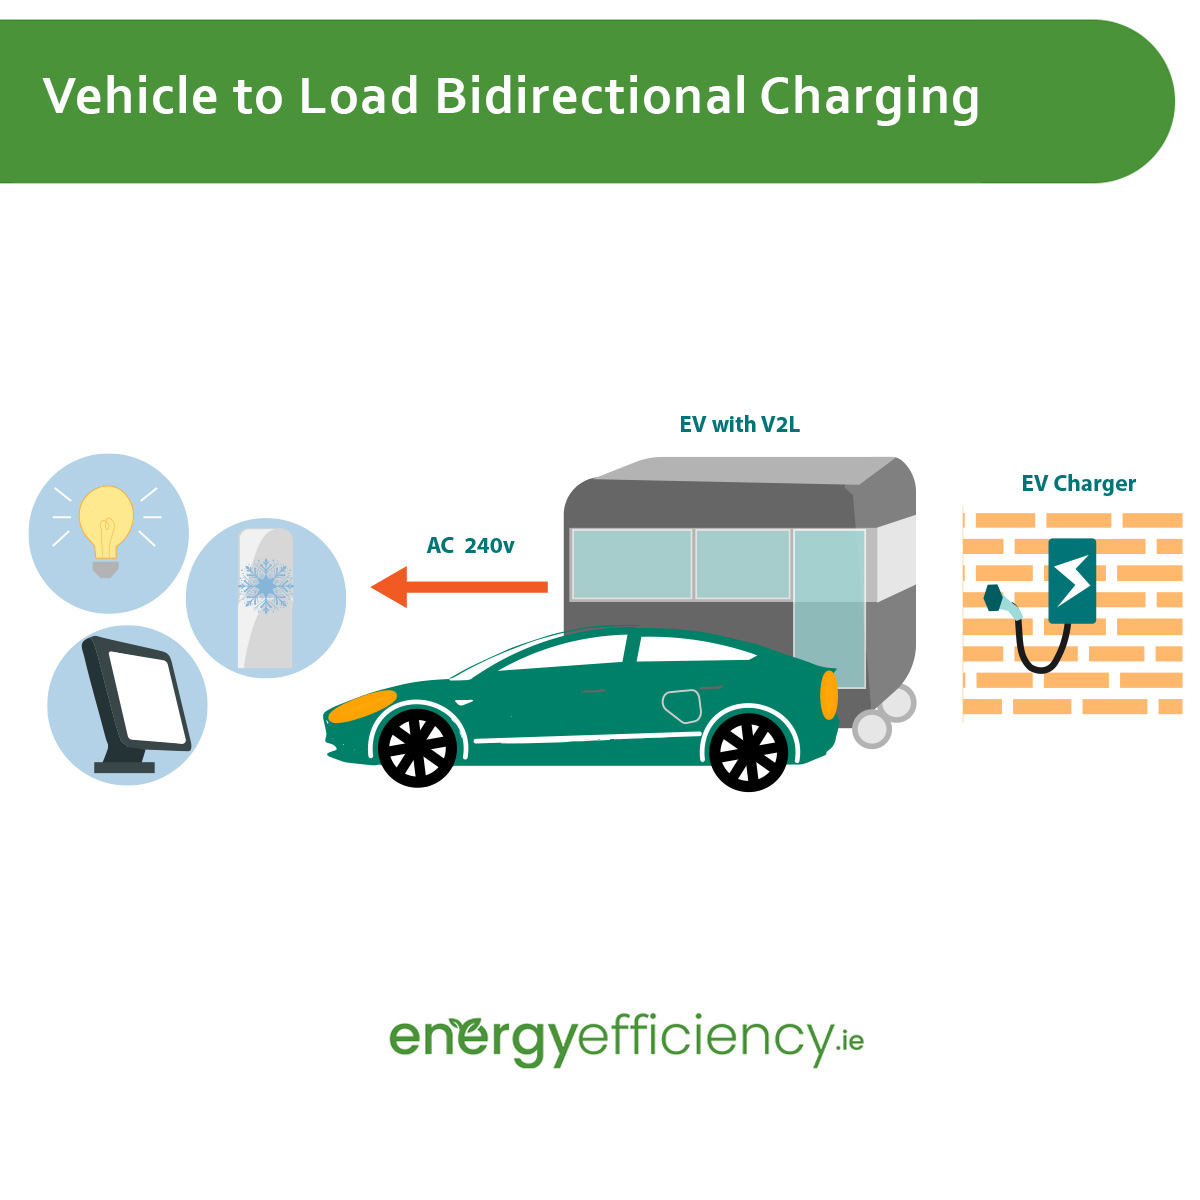 Vehicle to Load Bidirectional Charging